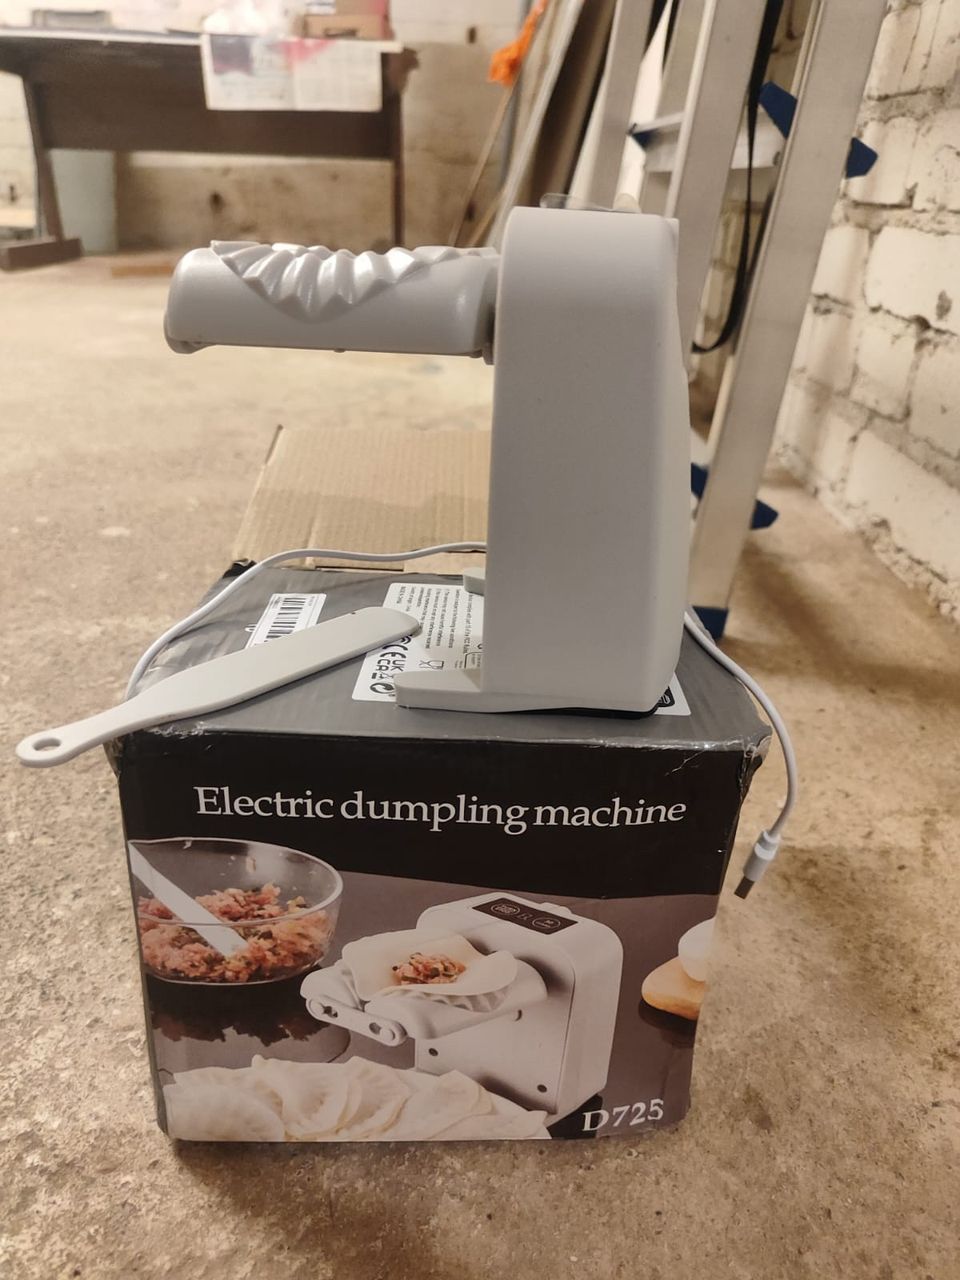 Dumpling machine